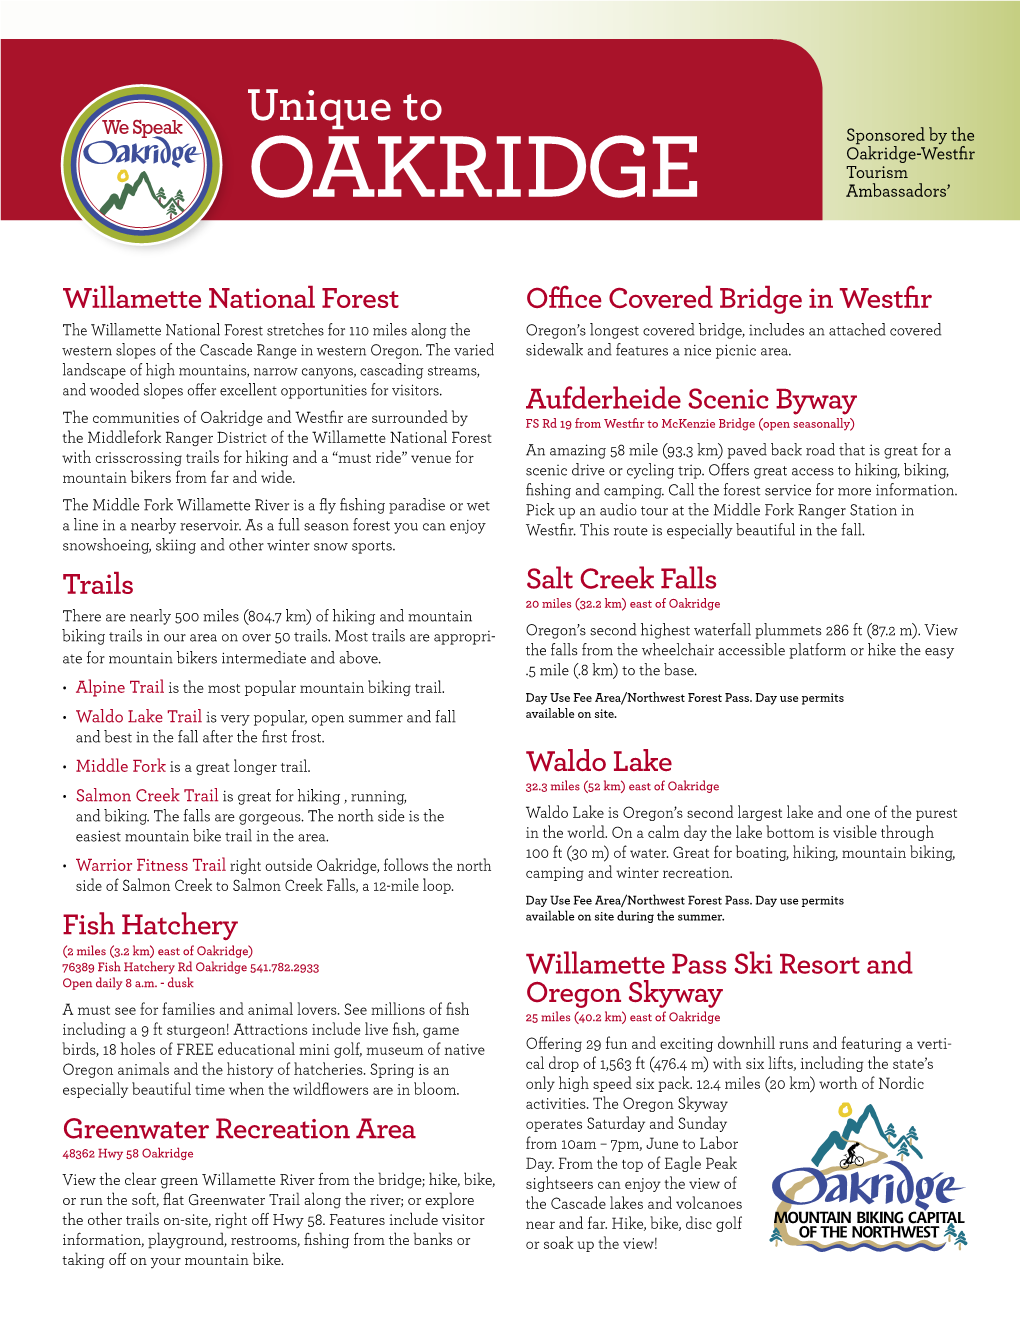 Oakridge-Westfir Tourism OAKRIDGE Ambassadors’